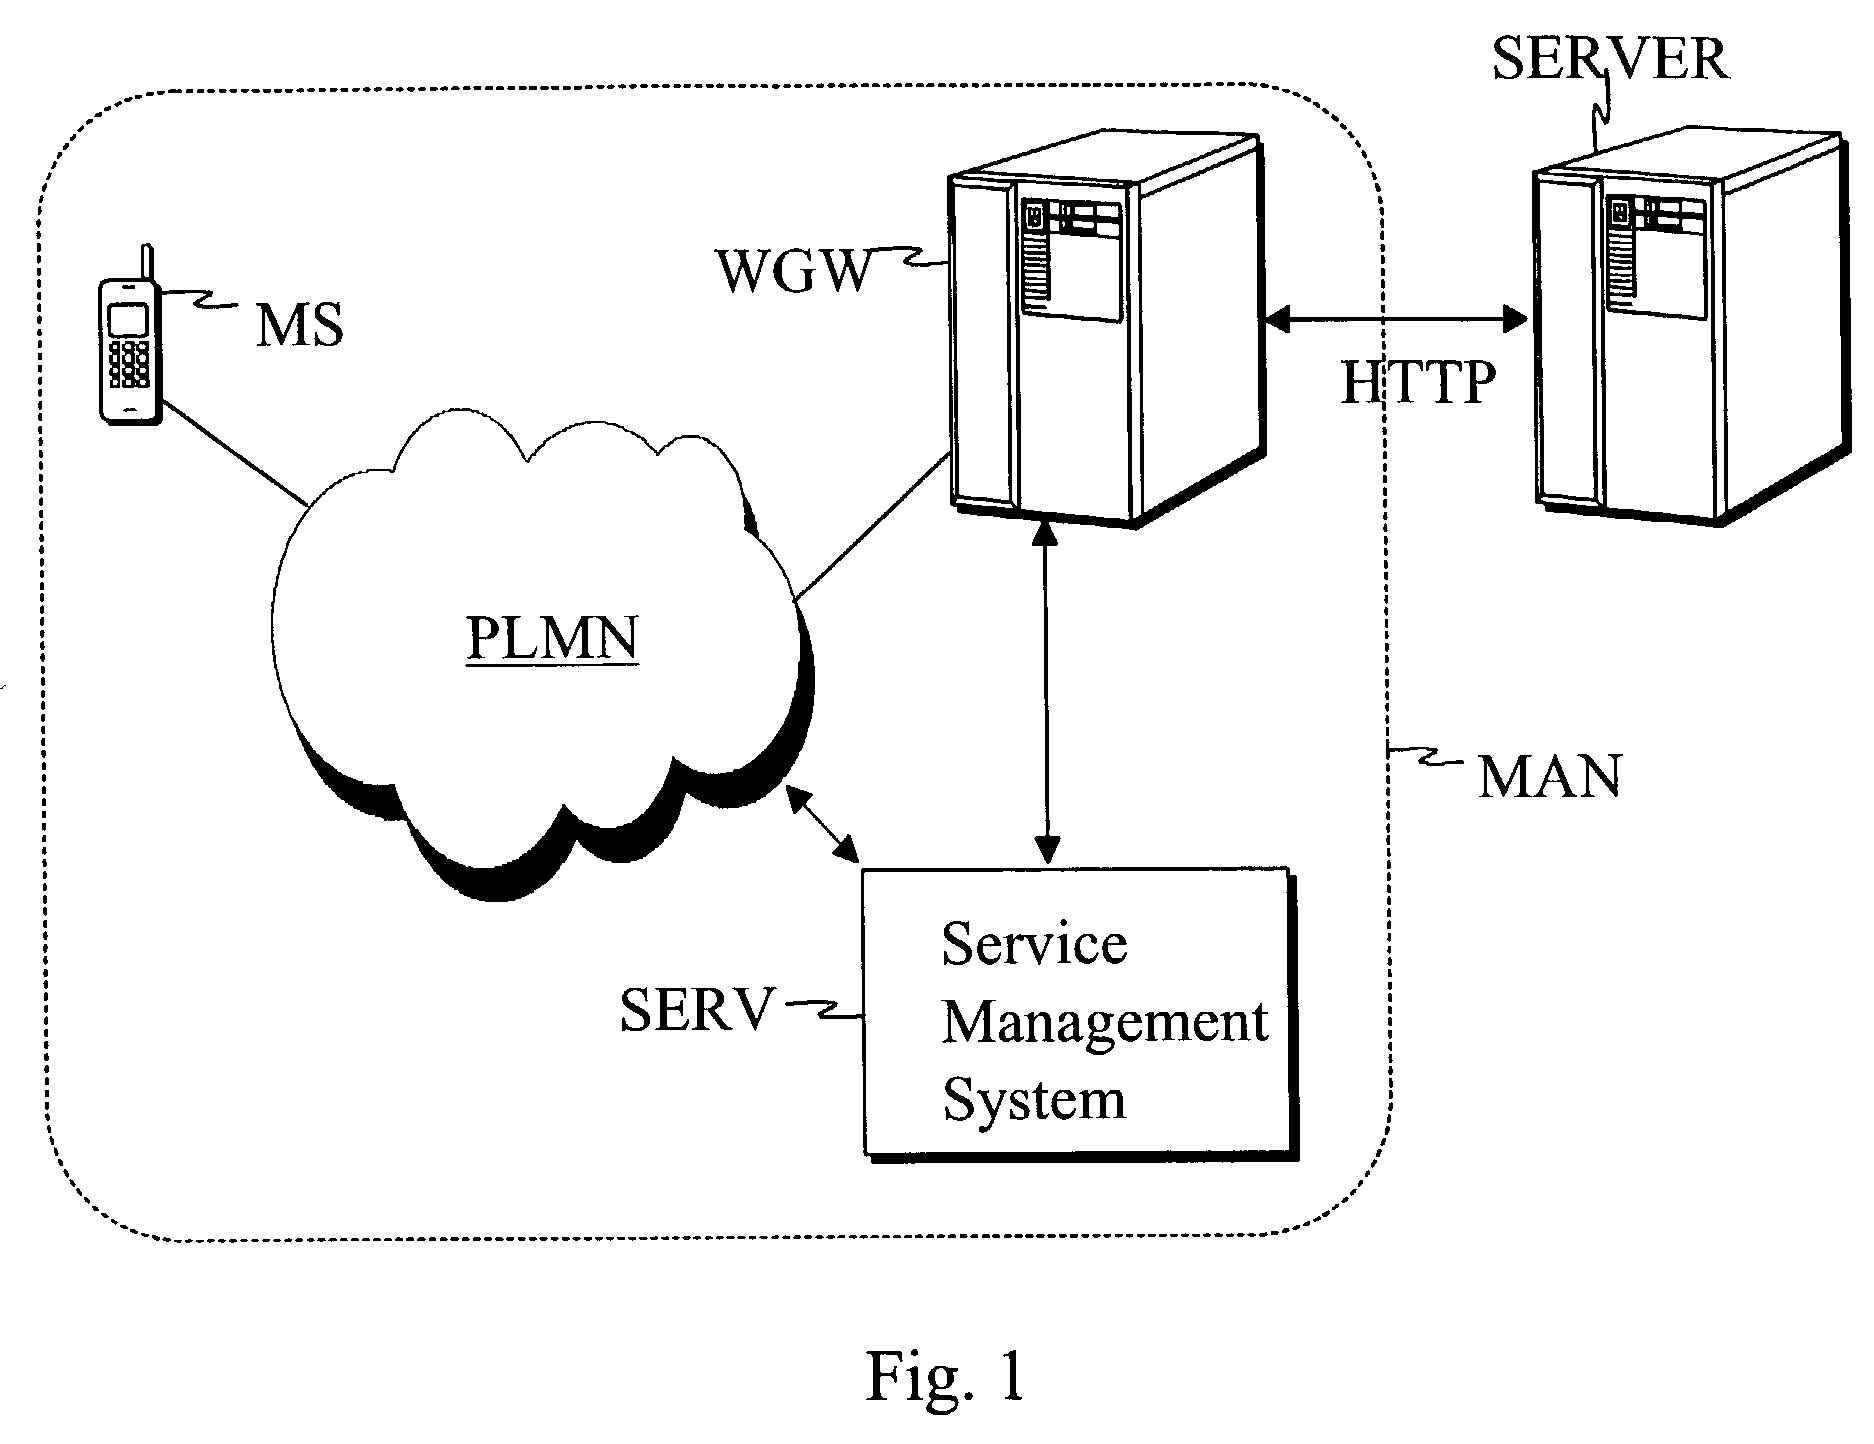 Transaction-based service billing in a telecommunication system